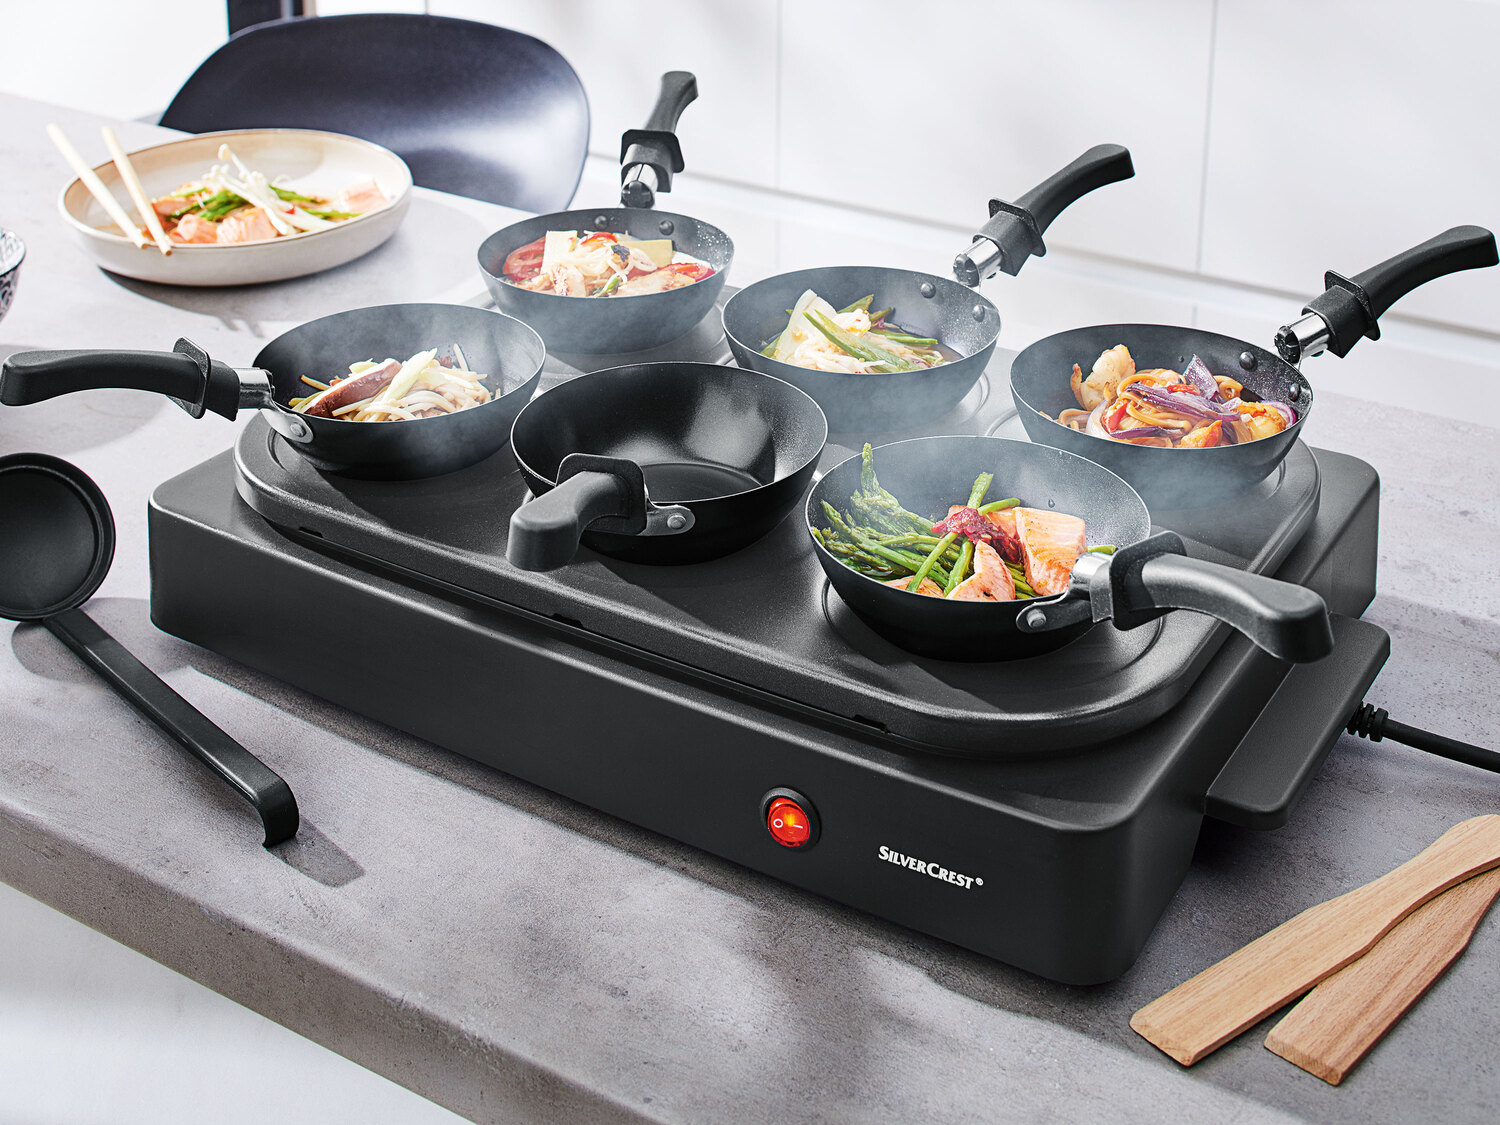 Set mini wok 2 in 1 elettrico Silvercrest Kitchen Tools, prezzo 59.00 &#8364; ...